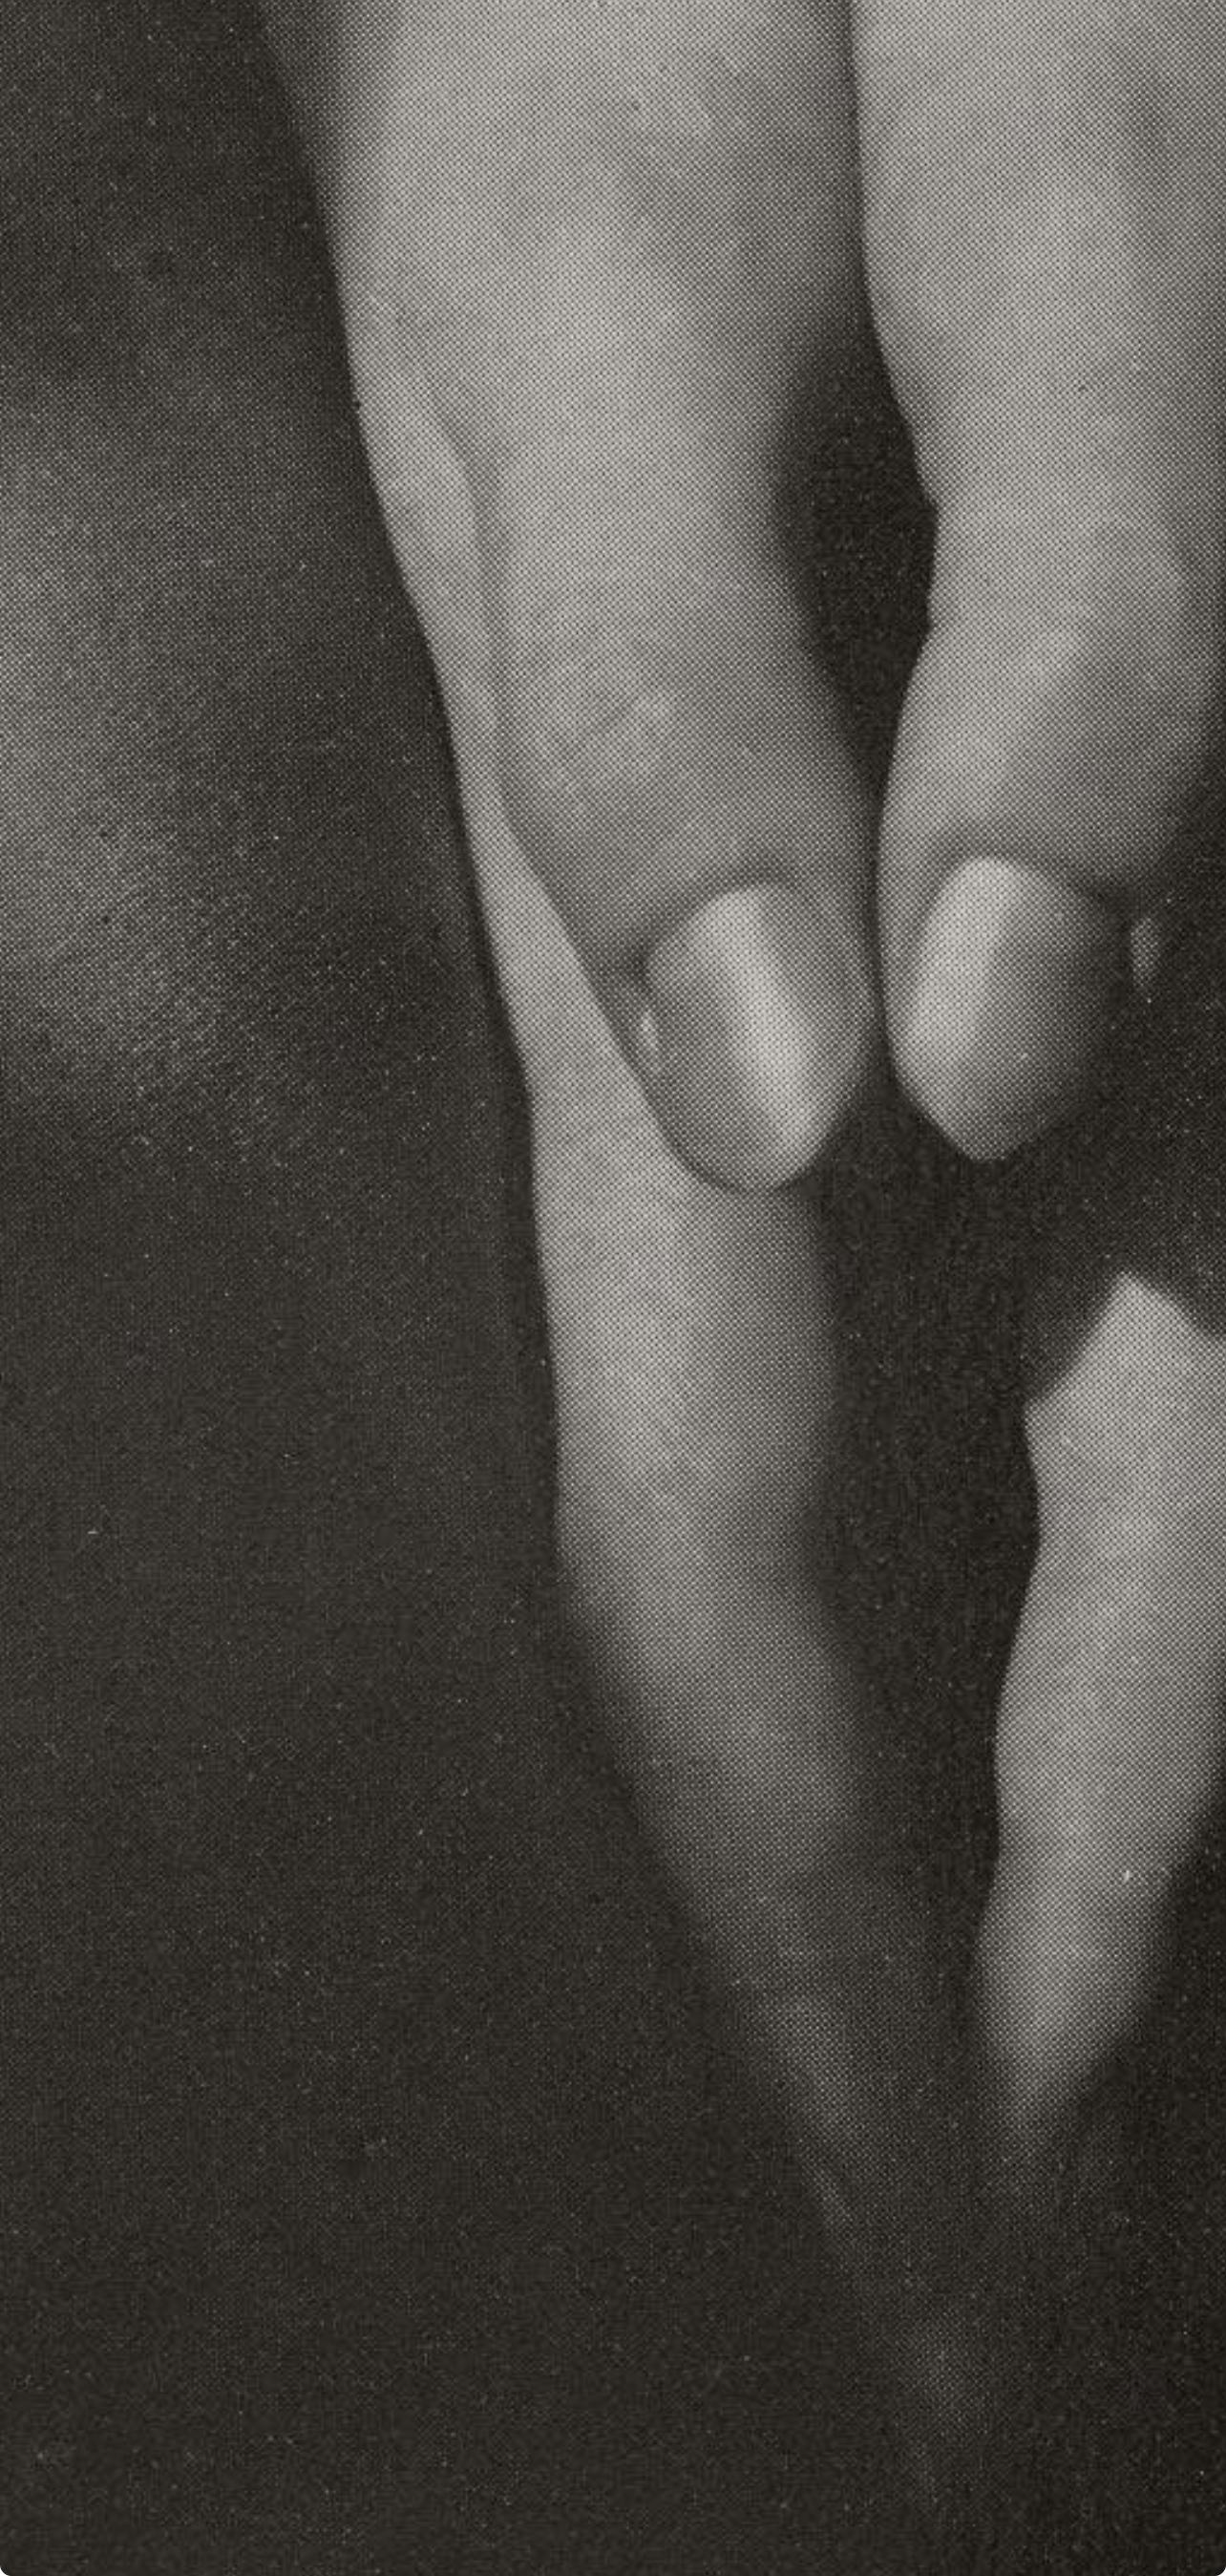 Stieglitz, Hands, Dorothy Norman, Alfred Stieglitz Memorial Portfolio (after) For Sale 3